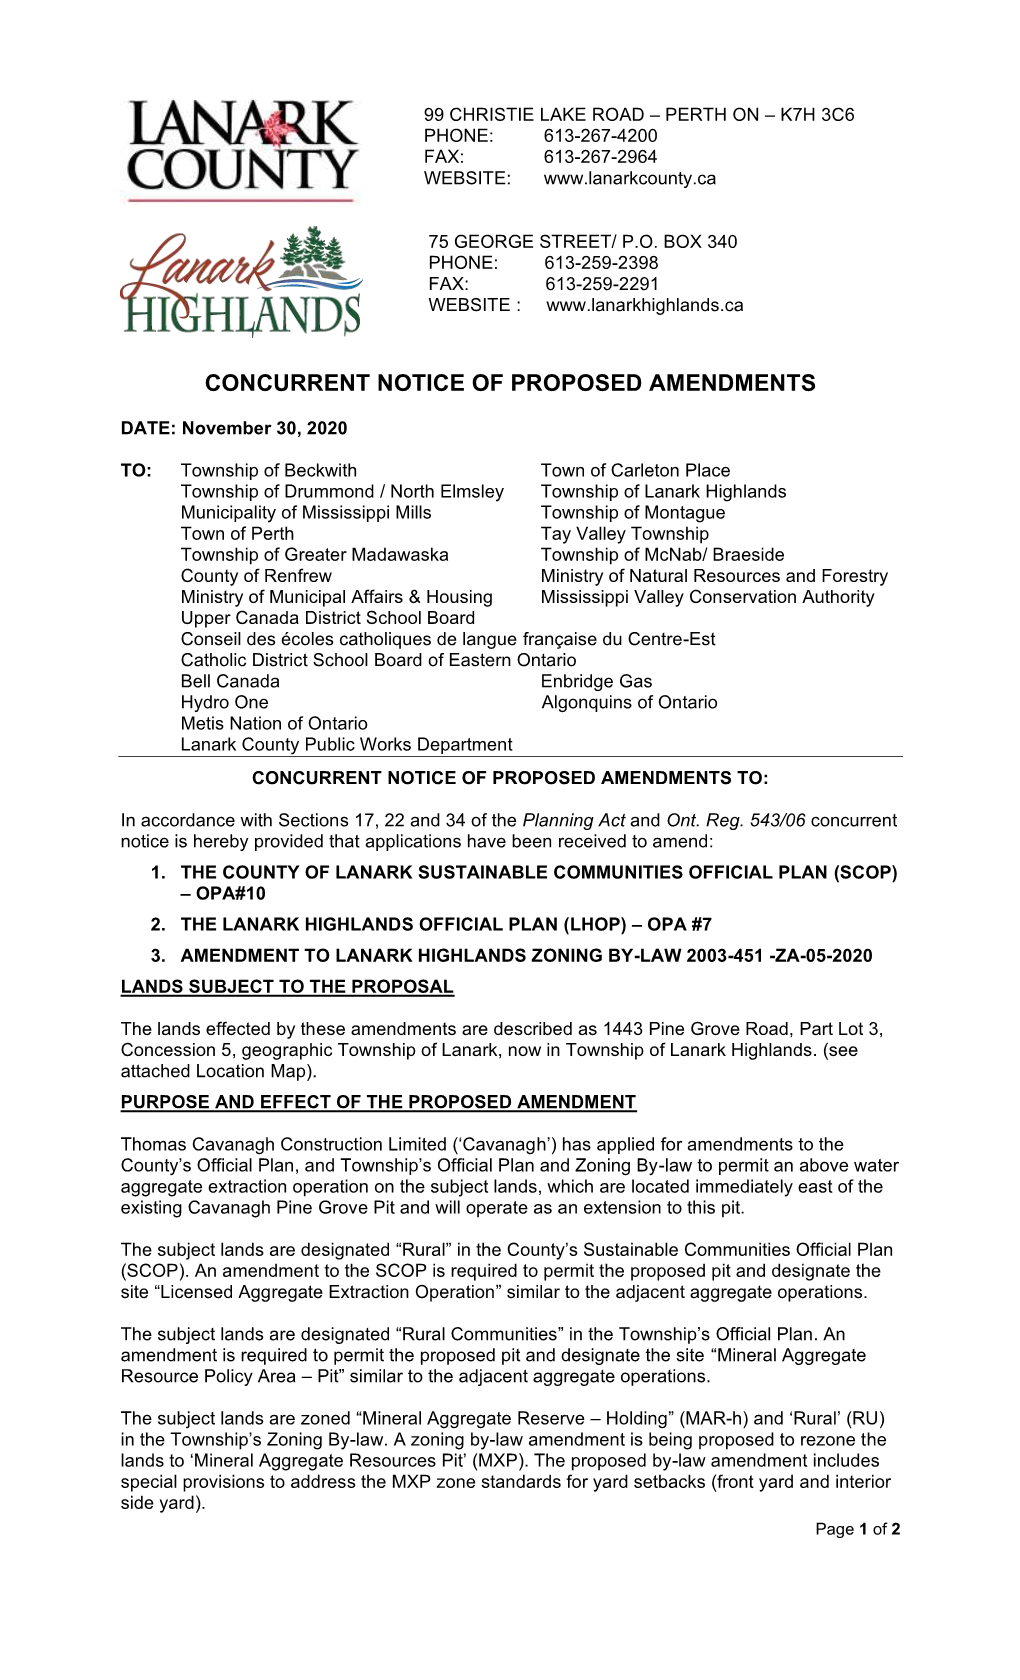 Concurrent Notice of Proposed Amendments